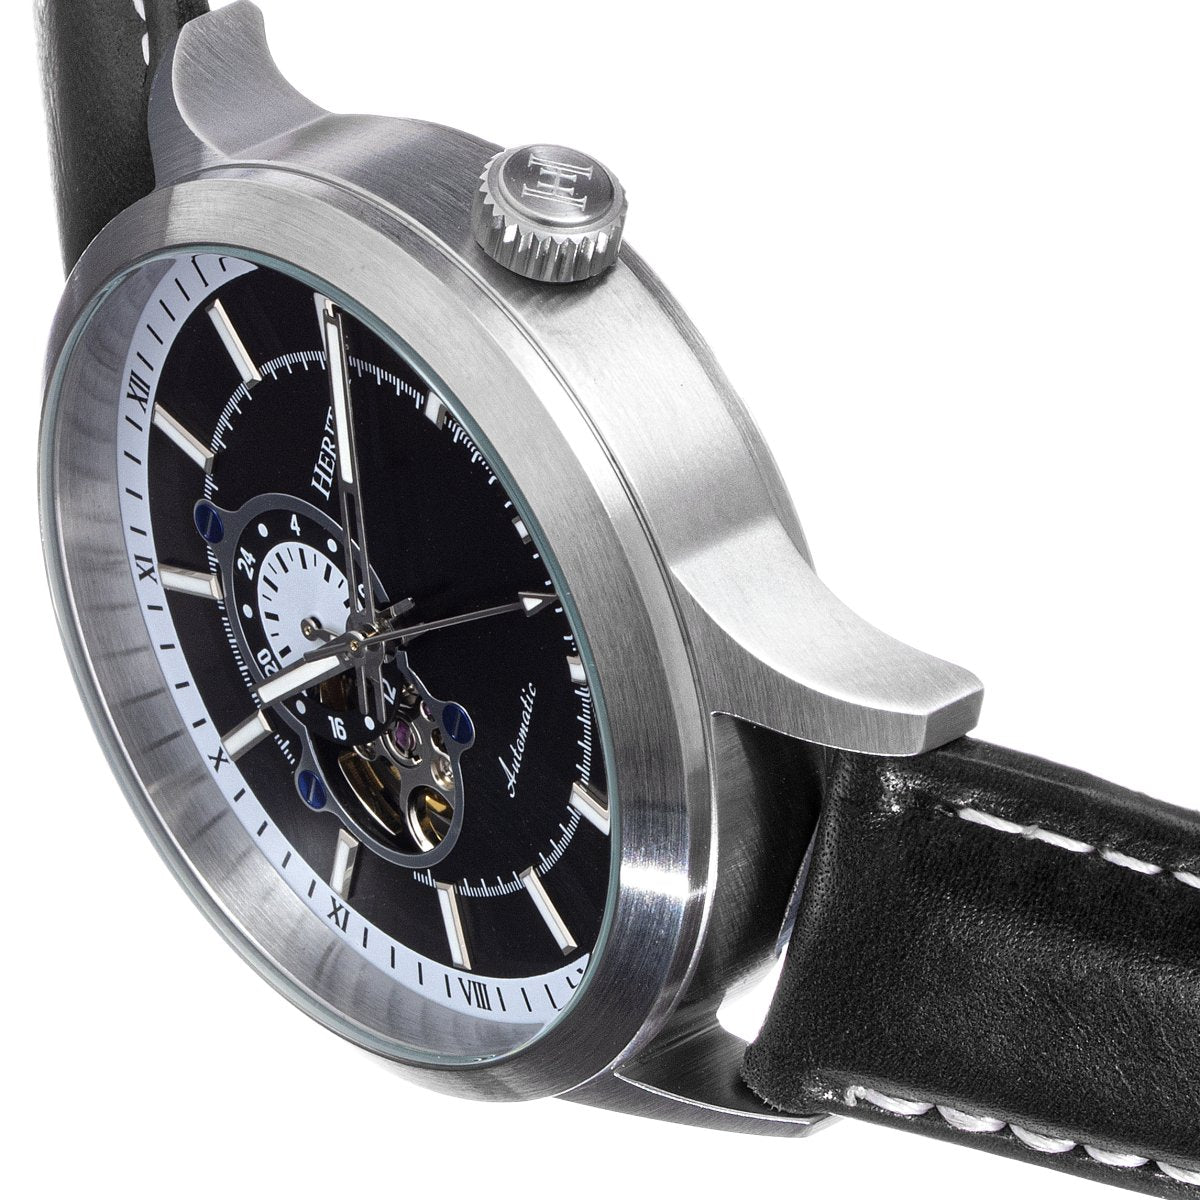 Heritor Automatic Oscar Semi-Skeleton Leather-Band Watch - Black - HERHS1001